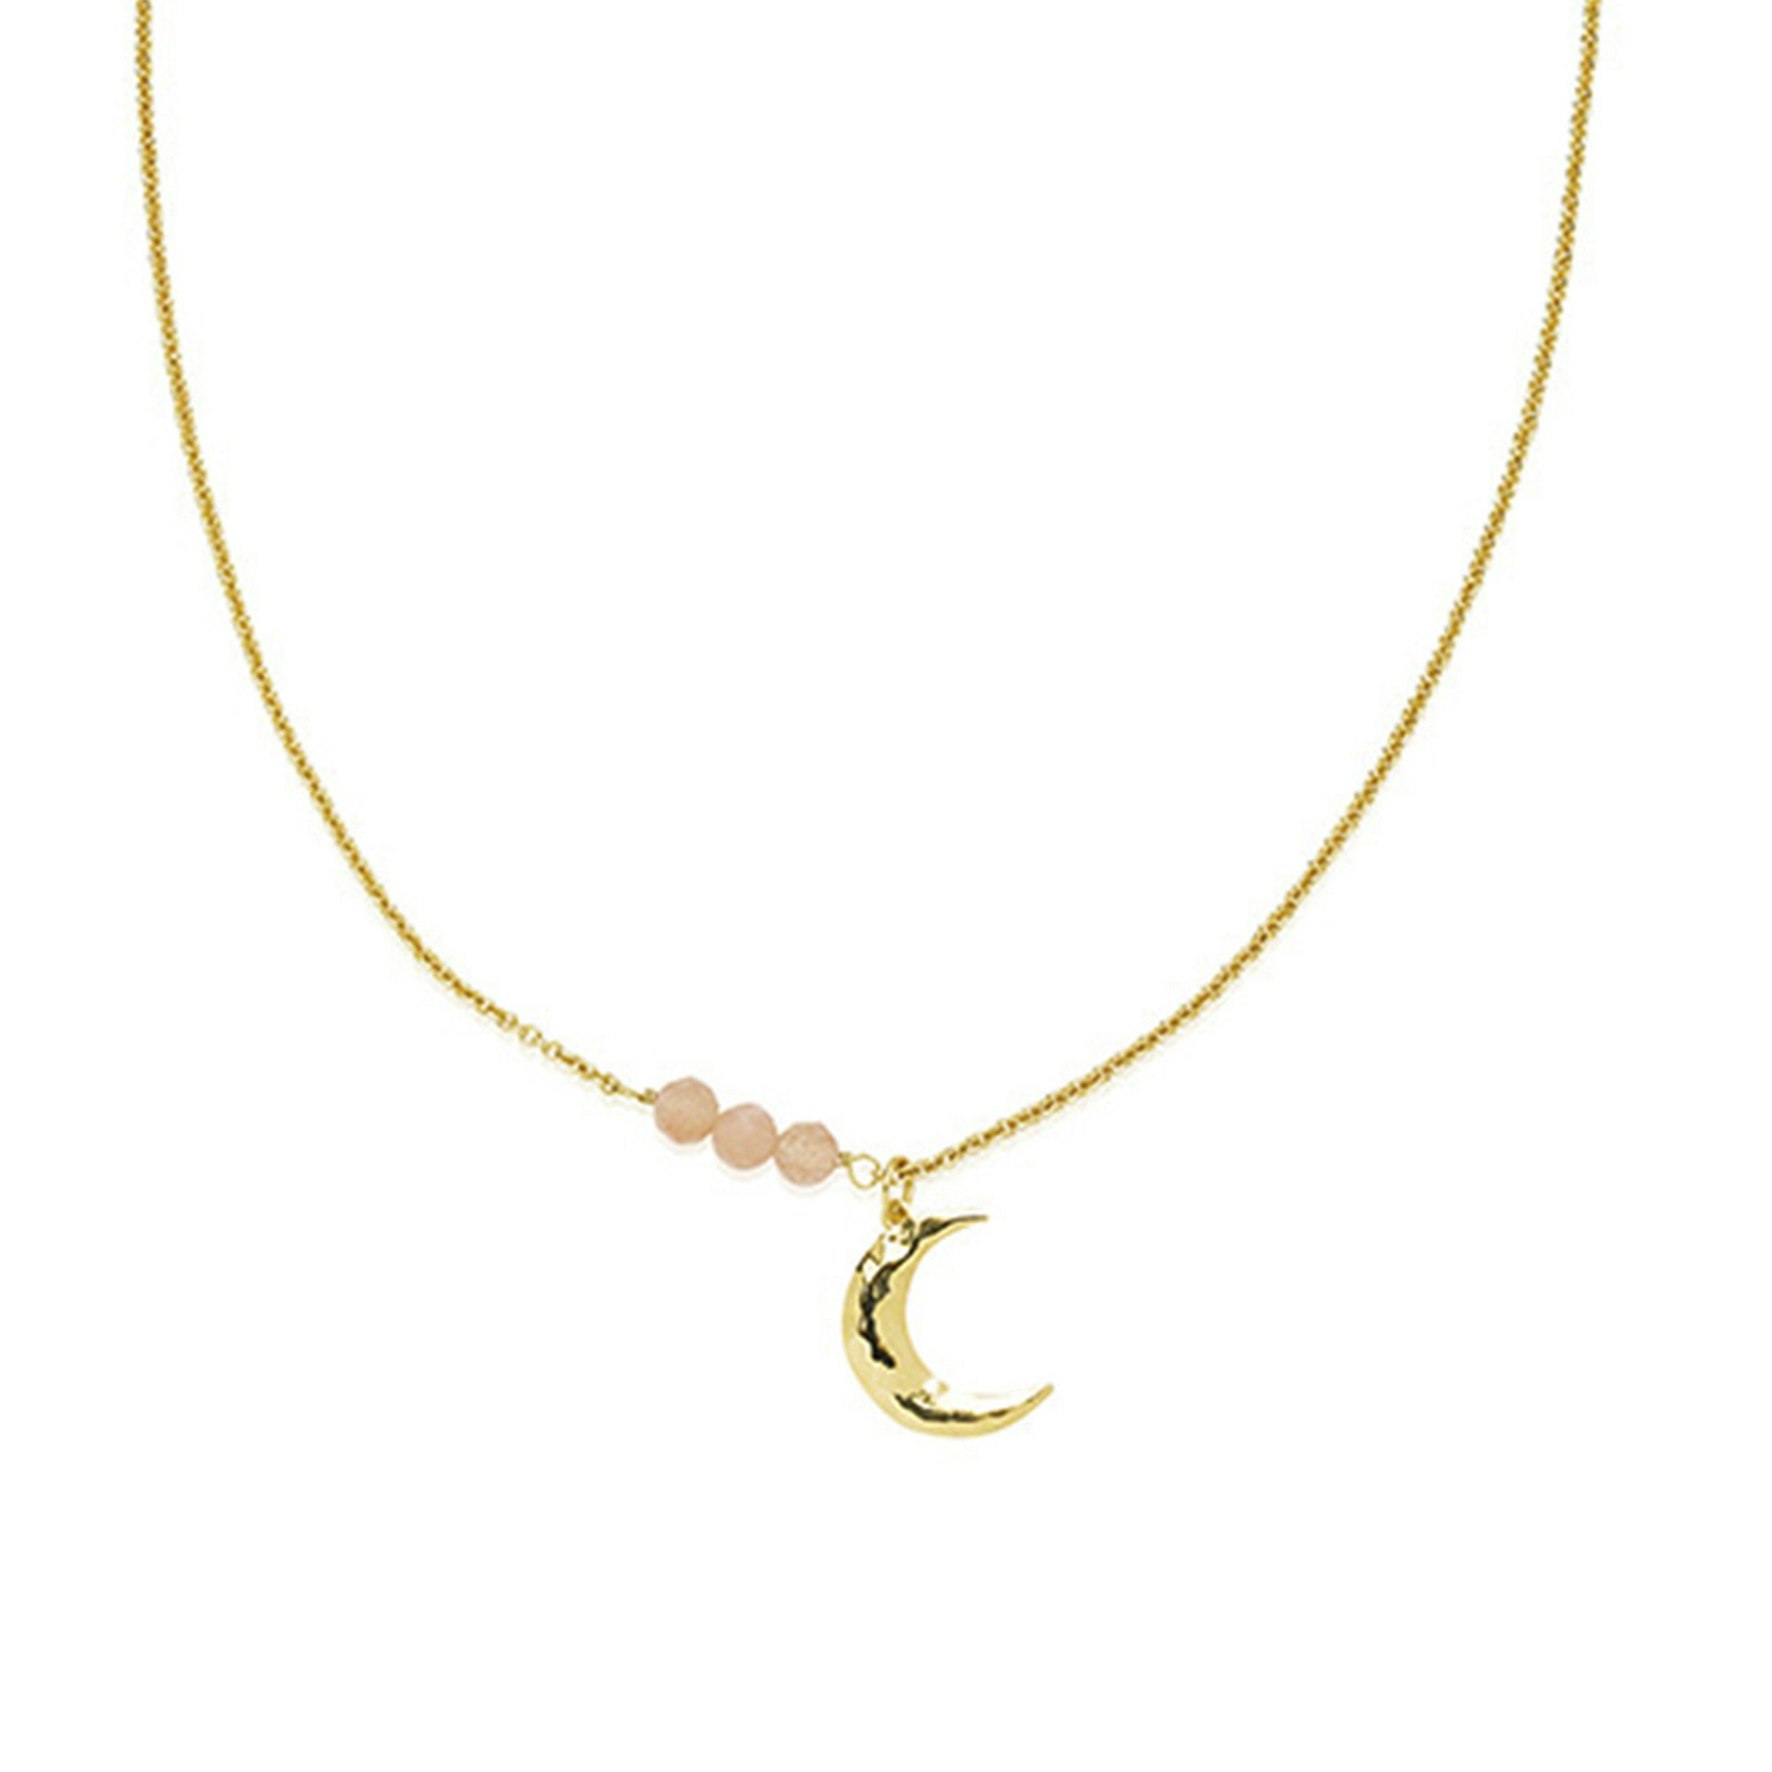 Mie Moltke Necklace With Moon And Pearls fra Izabel Camille i Forgylt-Sølv Sterling 925